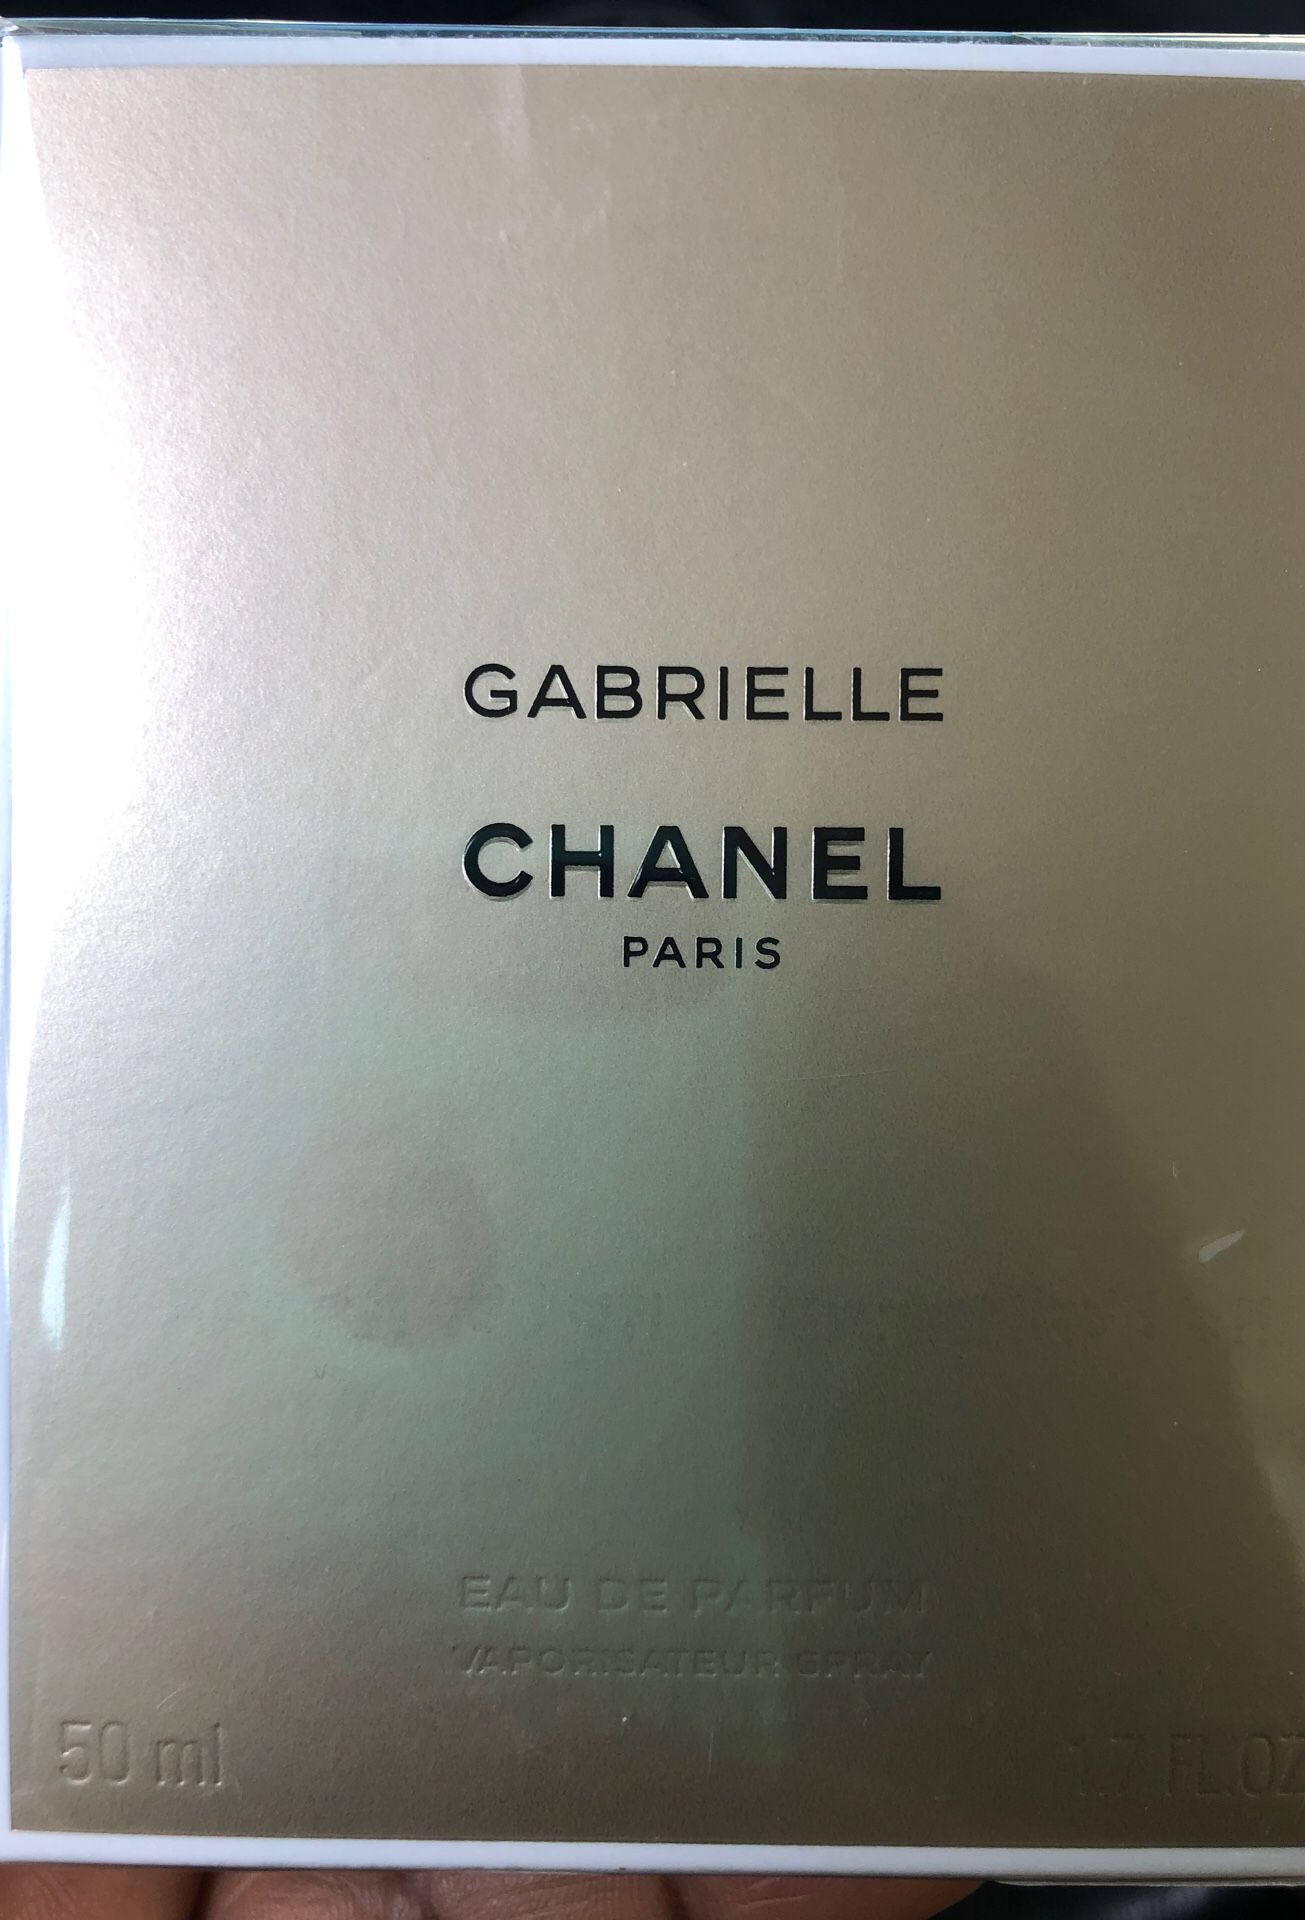 Unopened Gabrielle Chanel perfume